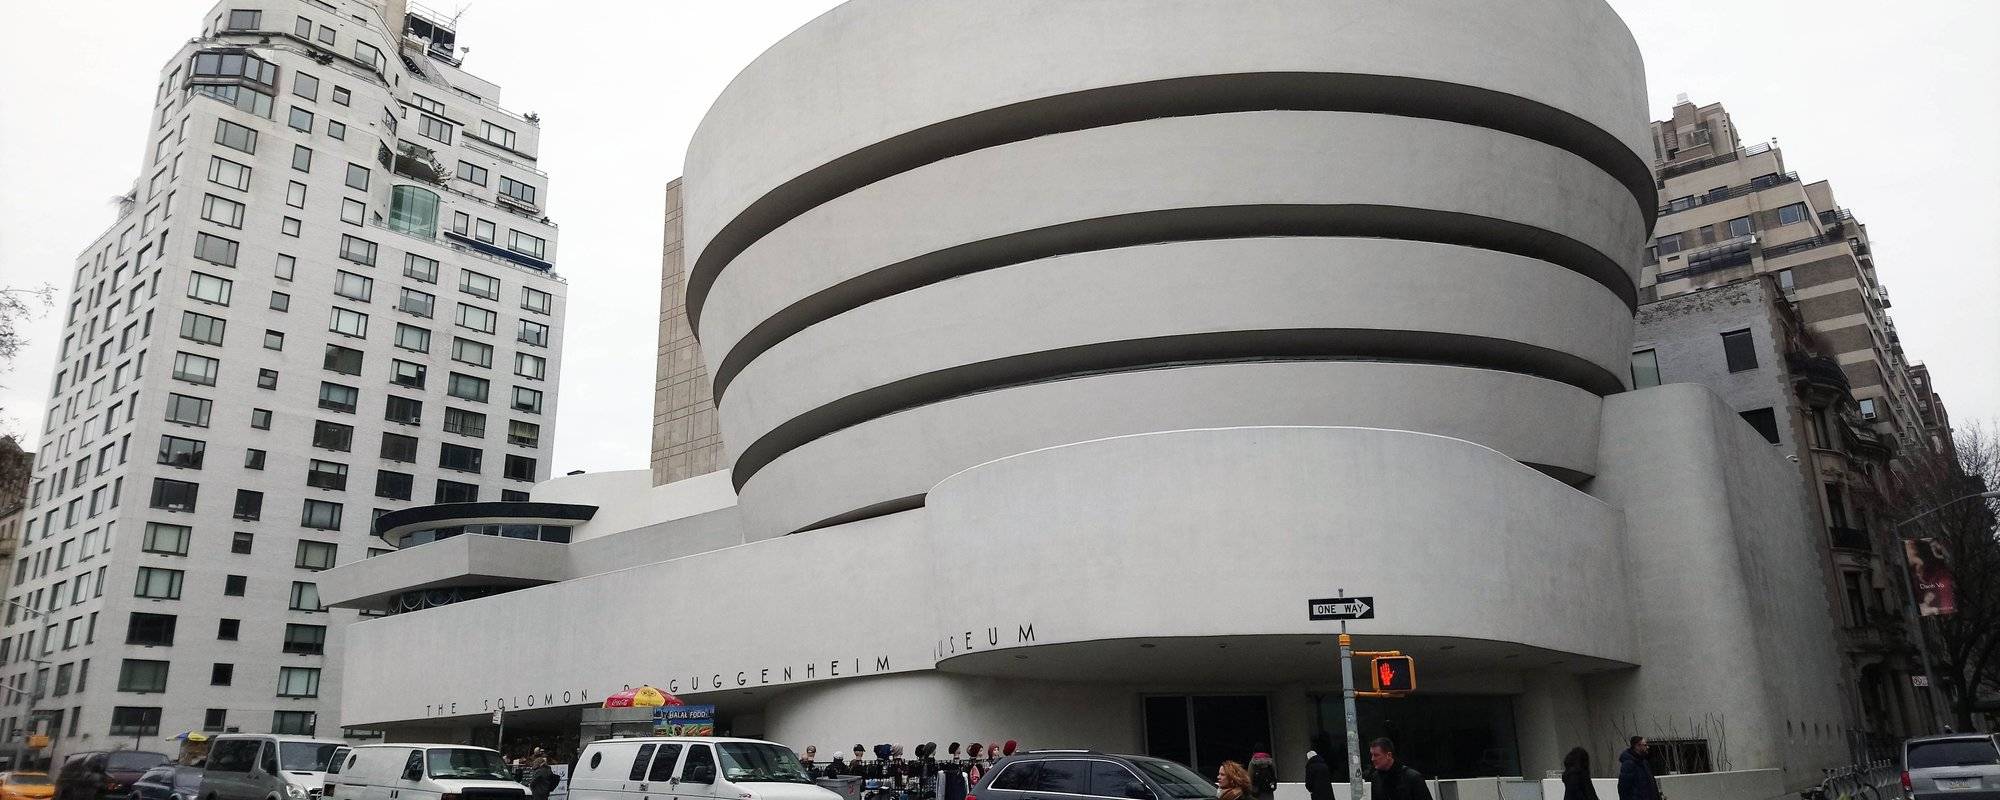 Guggenheim Museum - Museum itself is already an art. 紐約古根漢藝術館 – 藝術館本身已經是一件藝術